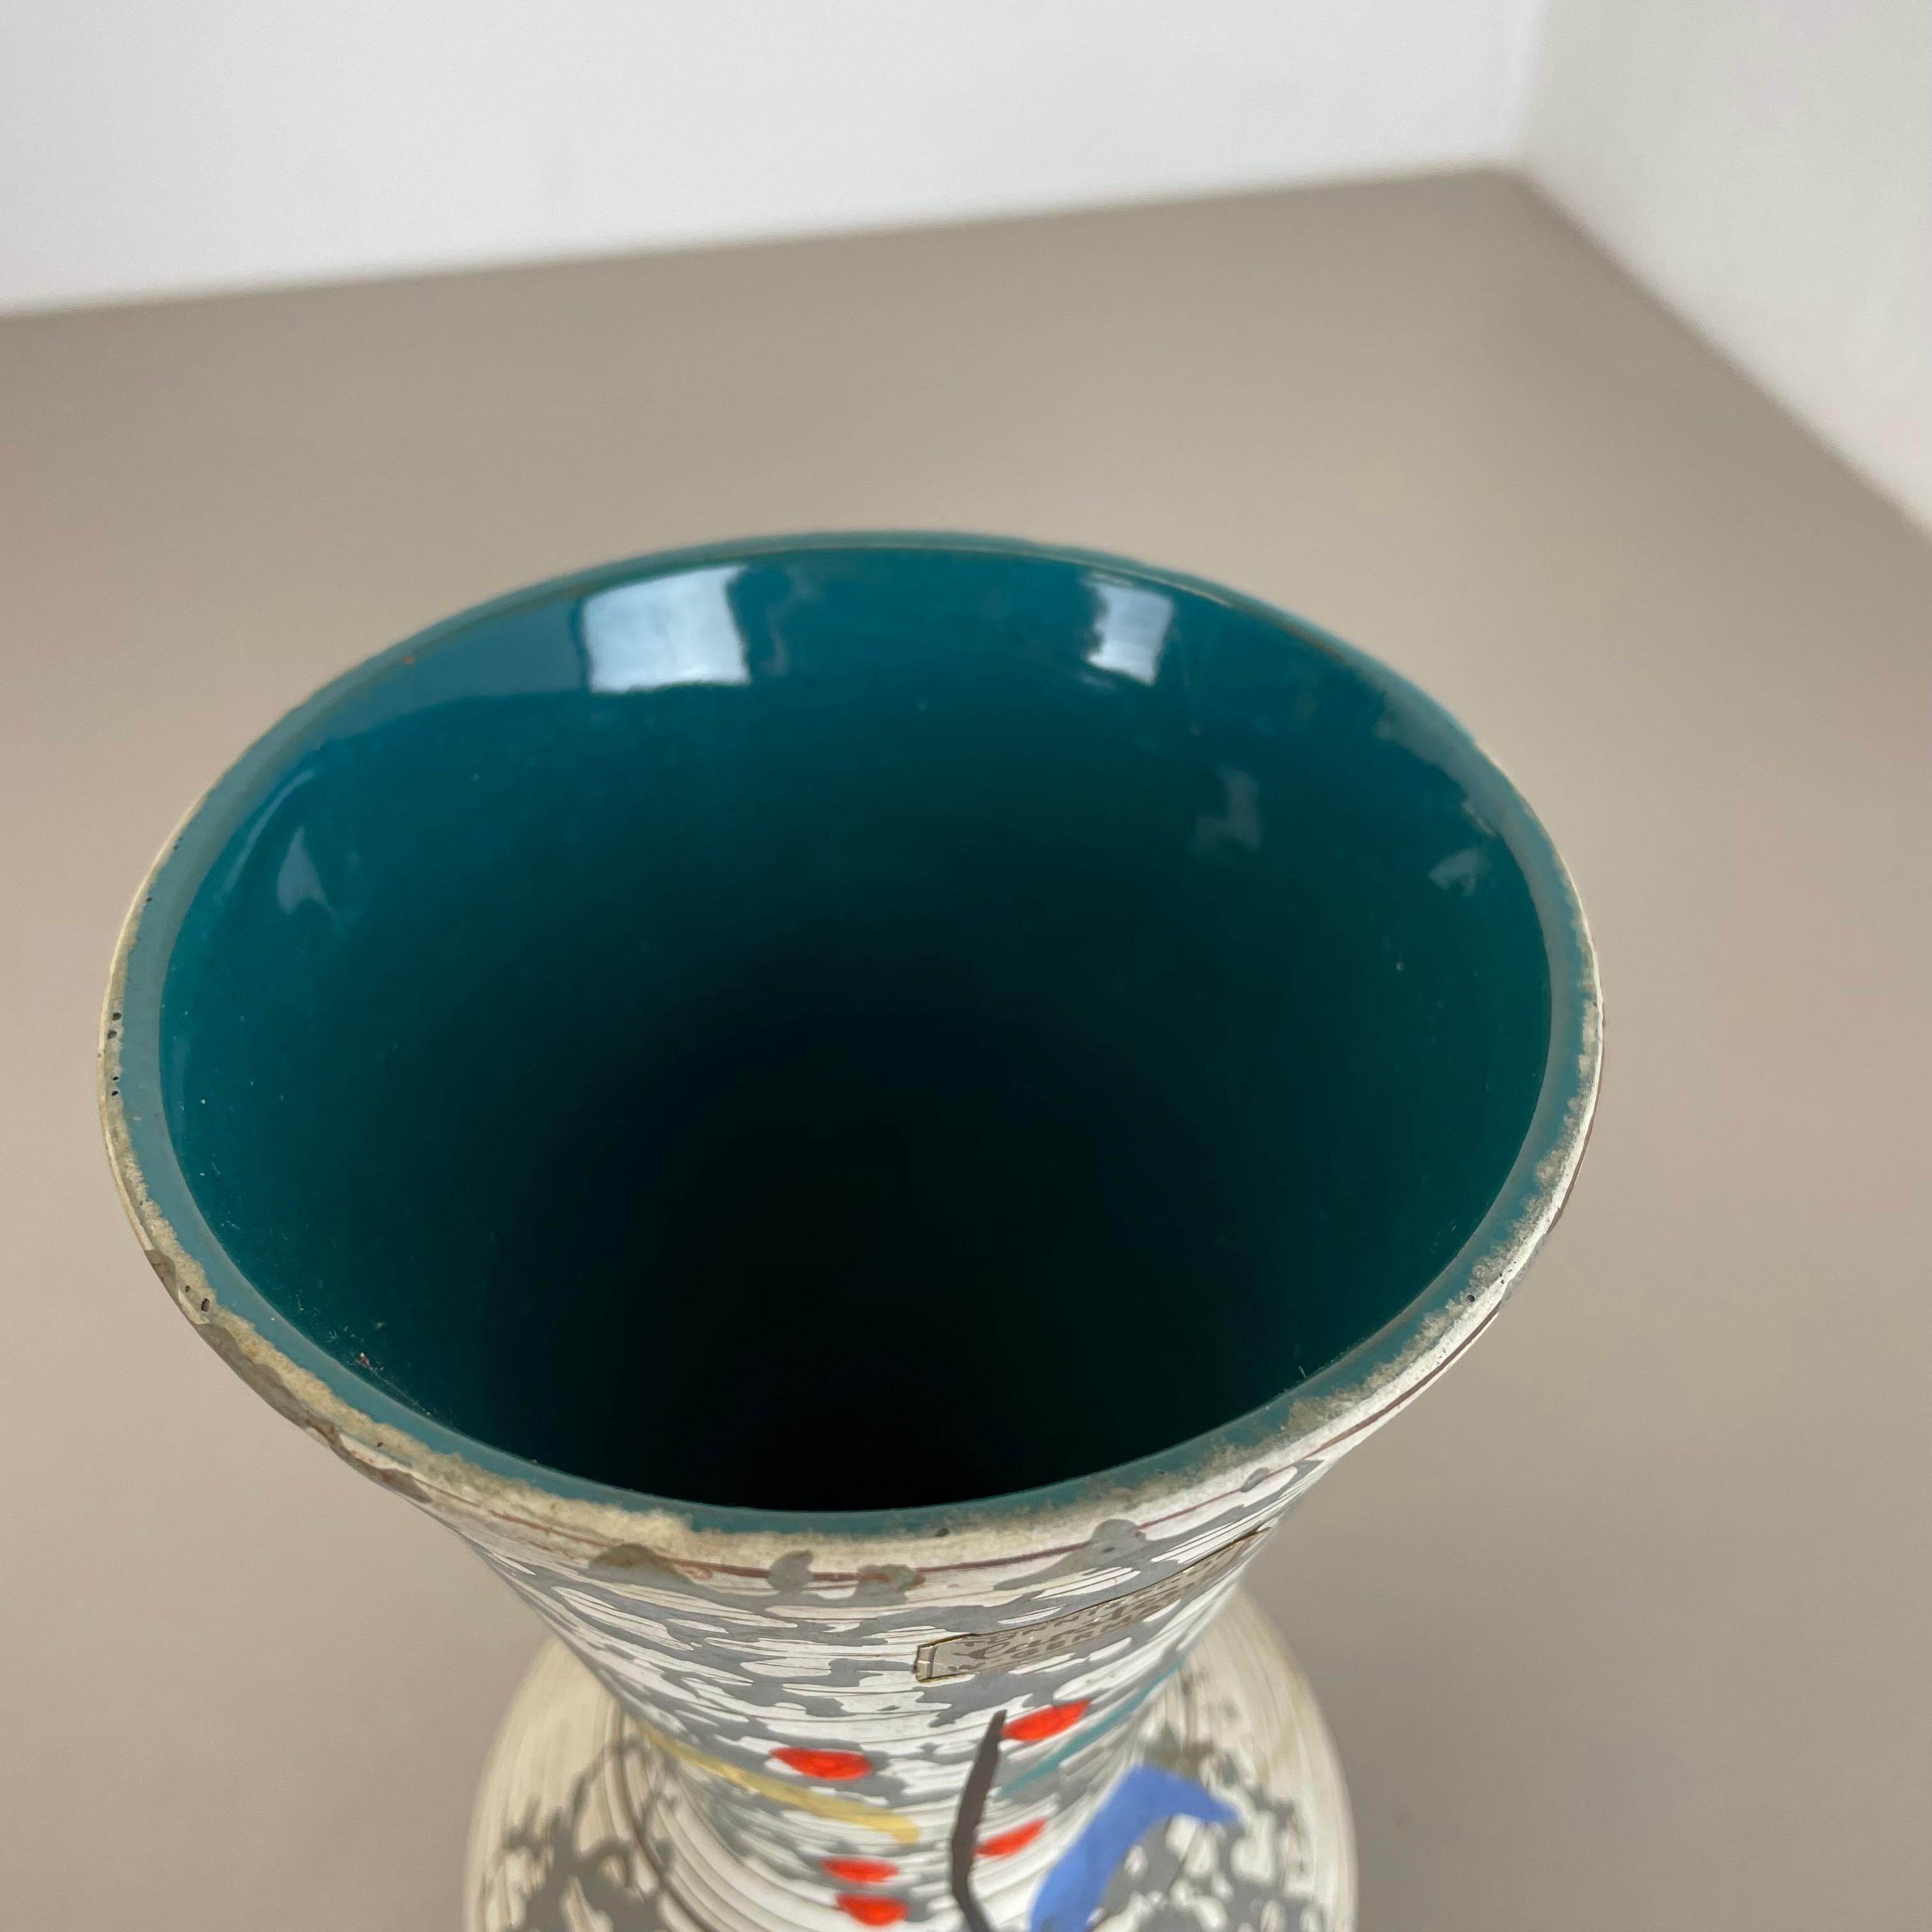 Super Glaze ABSTRACT Ceramic Pottery Vase Carstens Tönnieshof Germany, 1950s For Sale 1